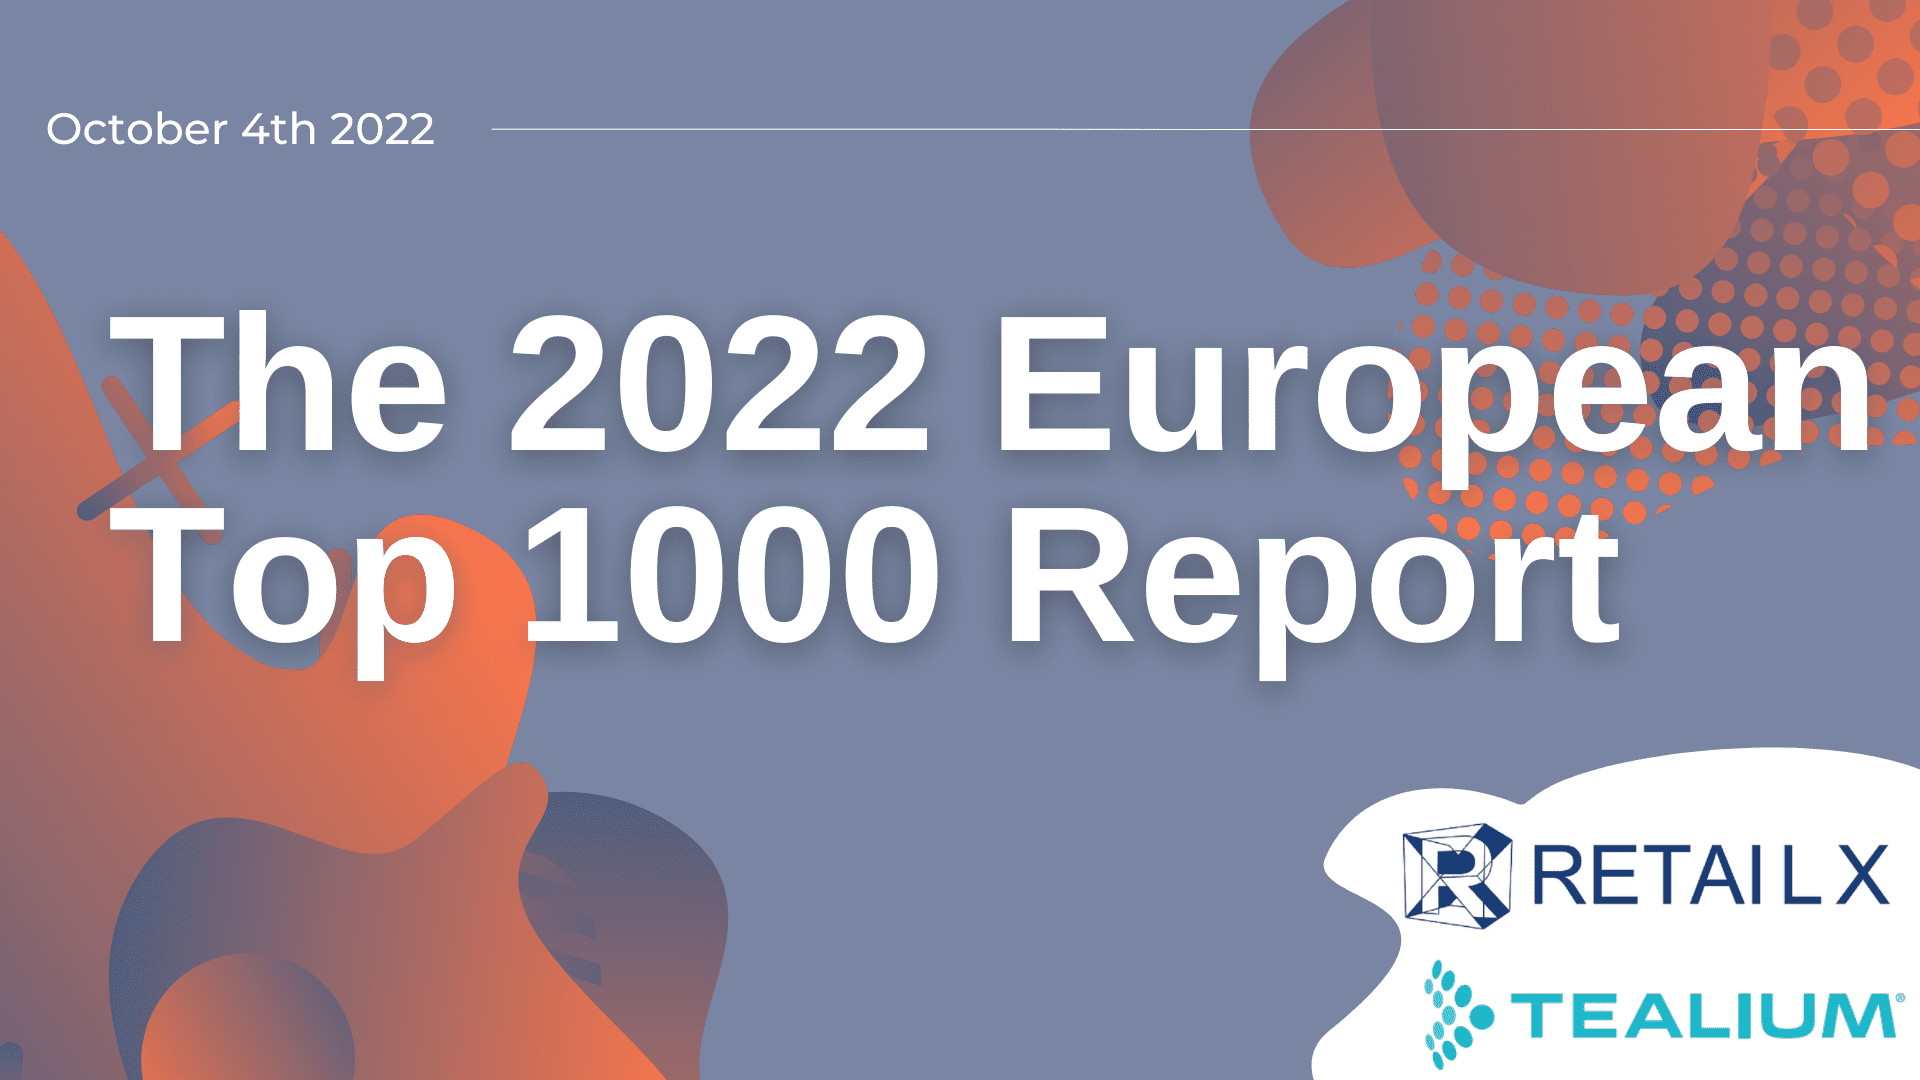 The 2022 European Top 1000 Report